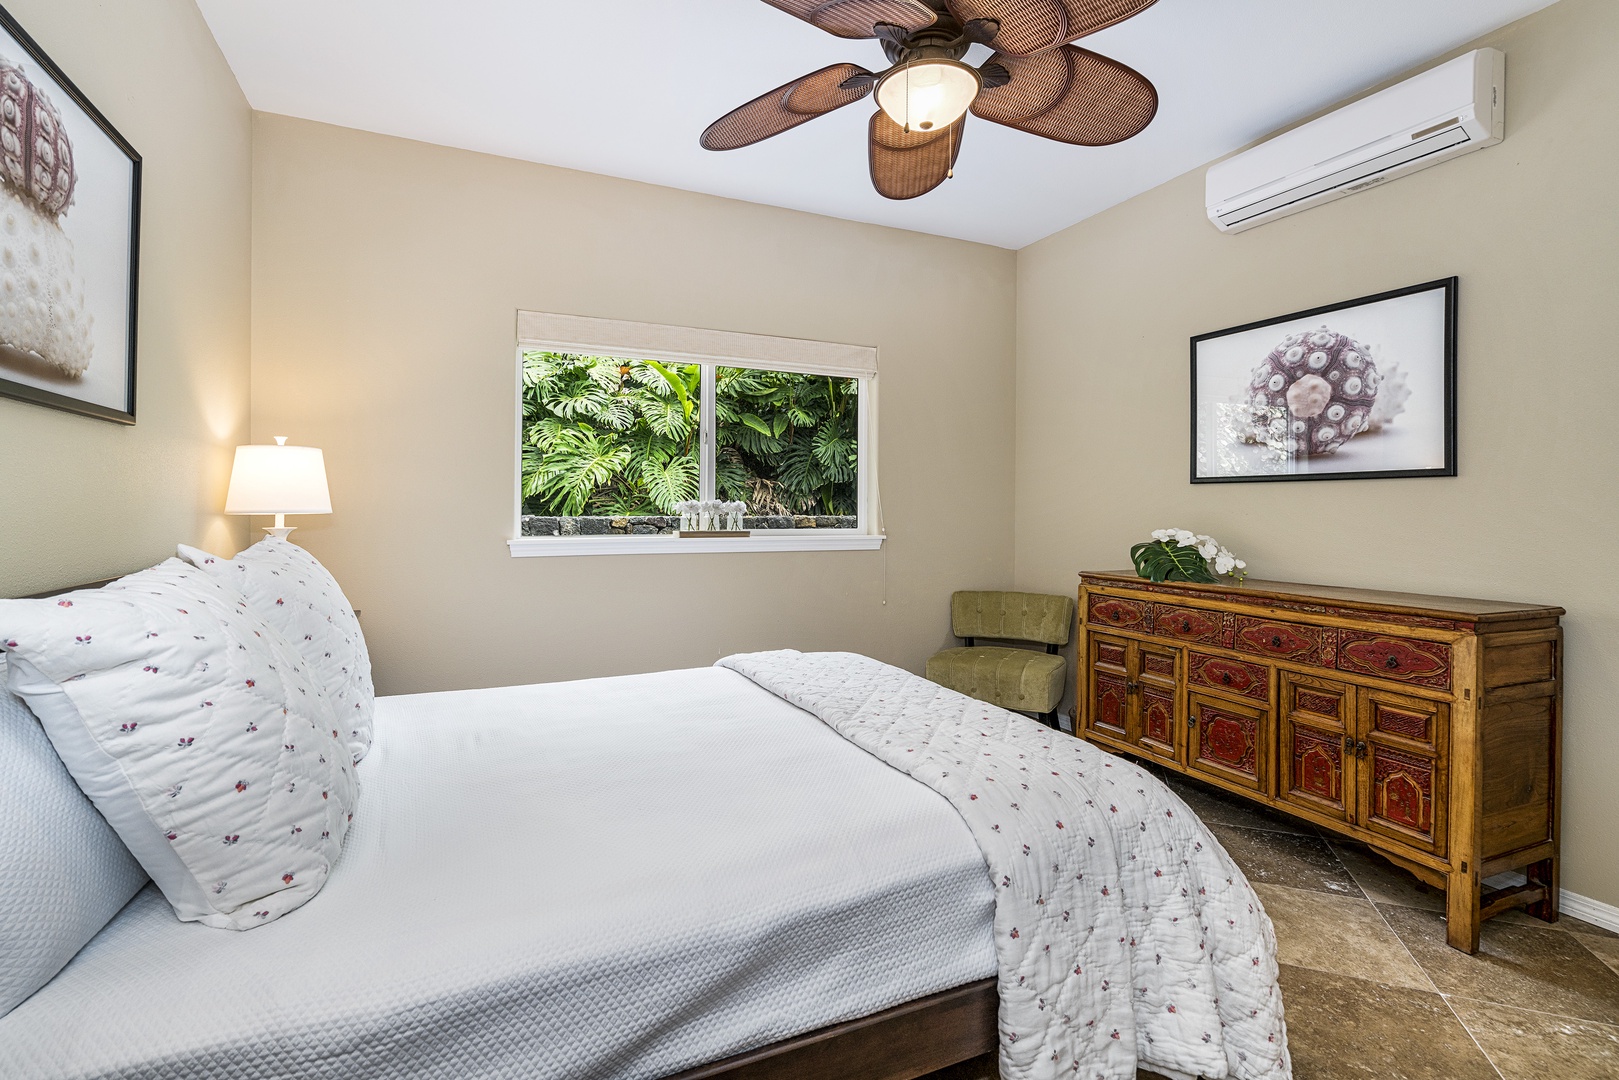 Kailua Kona Vacation Rentals, Sunset Hale - Guest bedroom